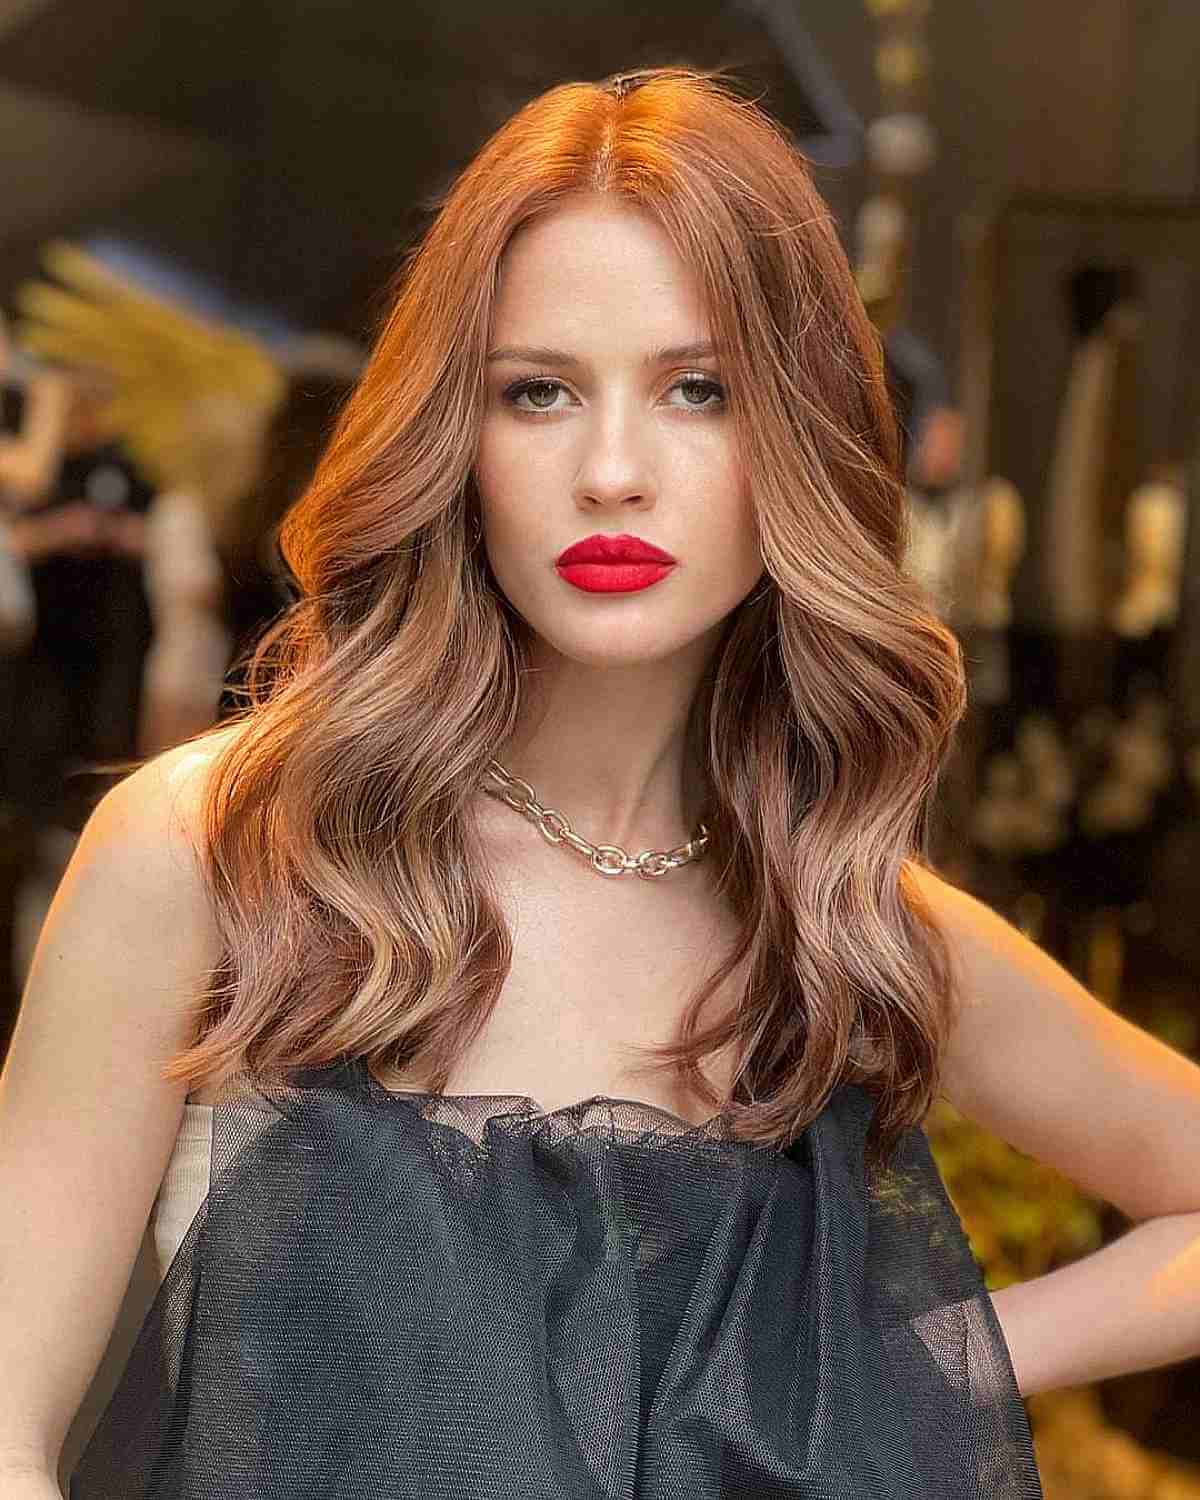 28 Best Reddish Brown Hair AKA 